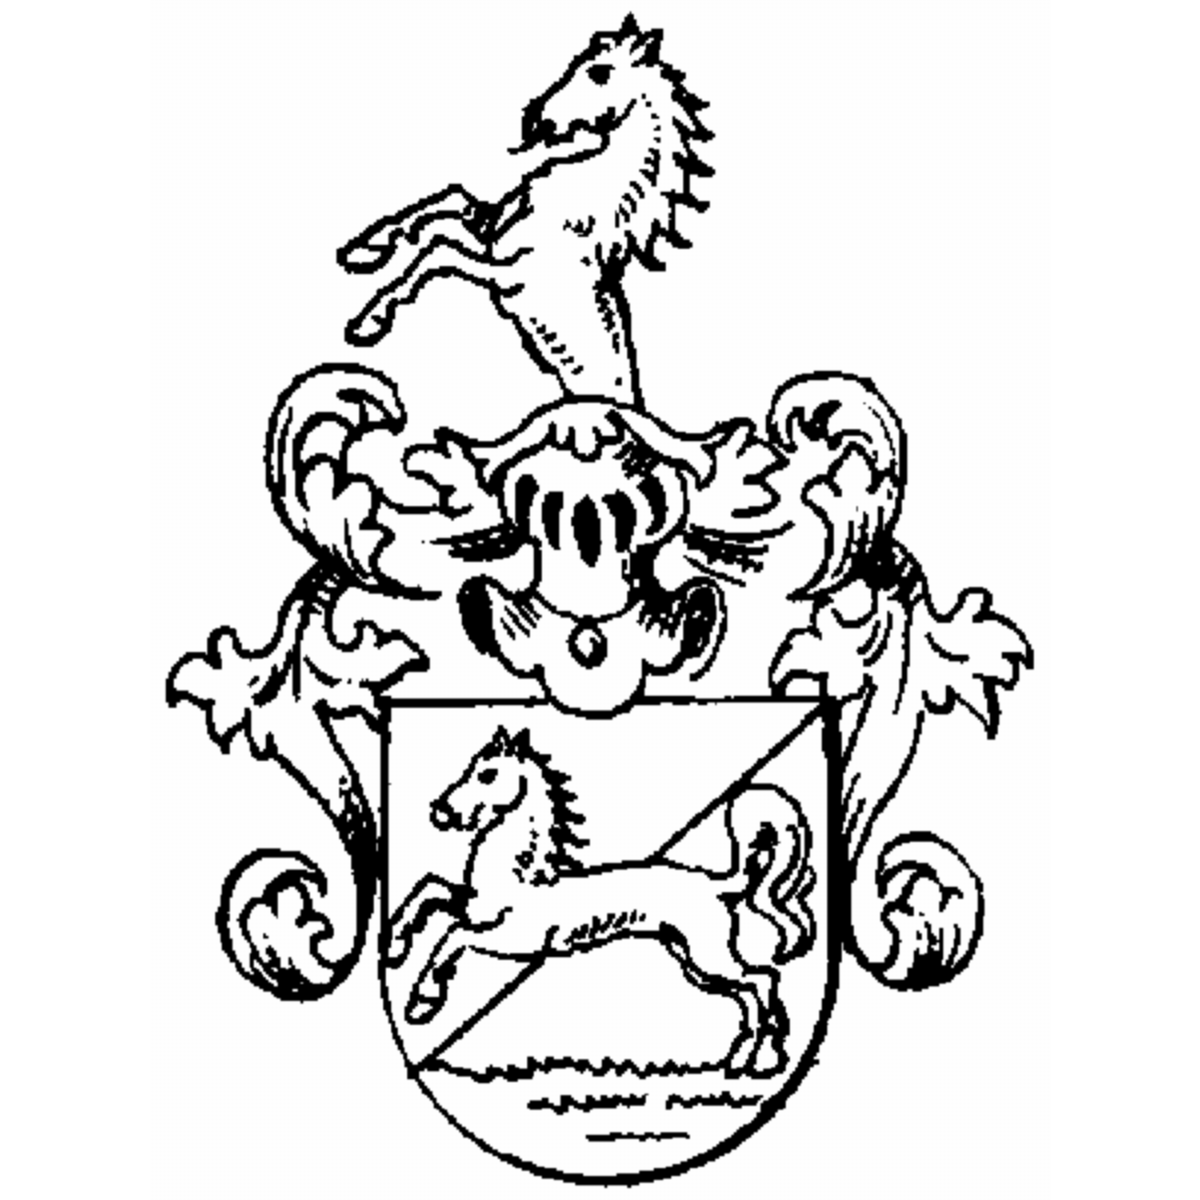 Wappen der Familie Tuchschmid